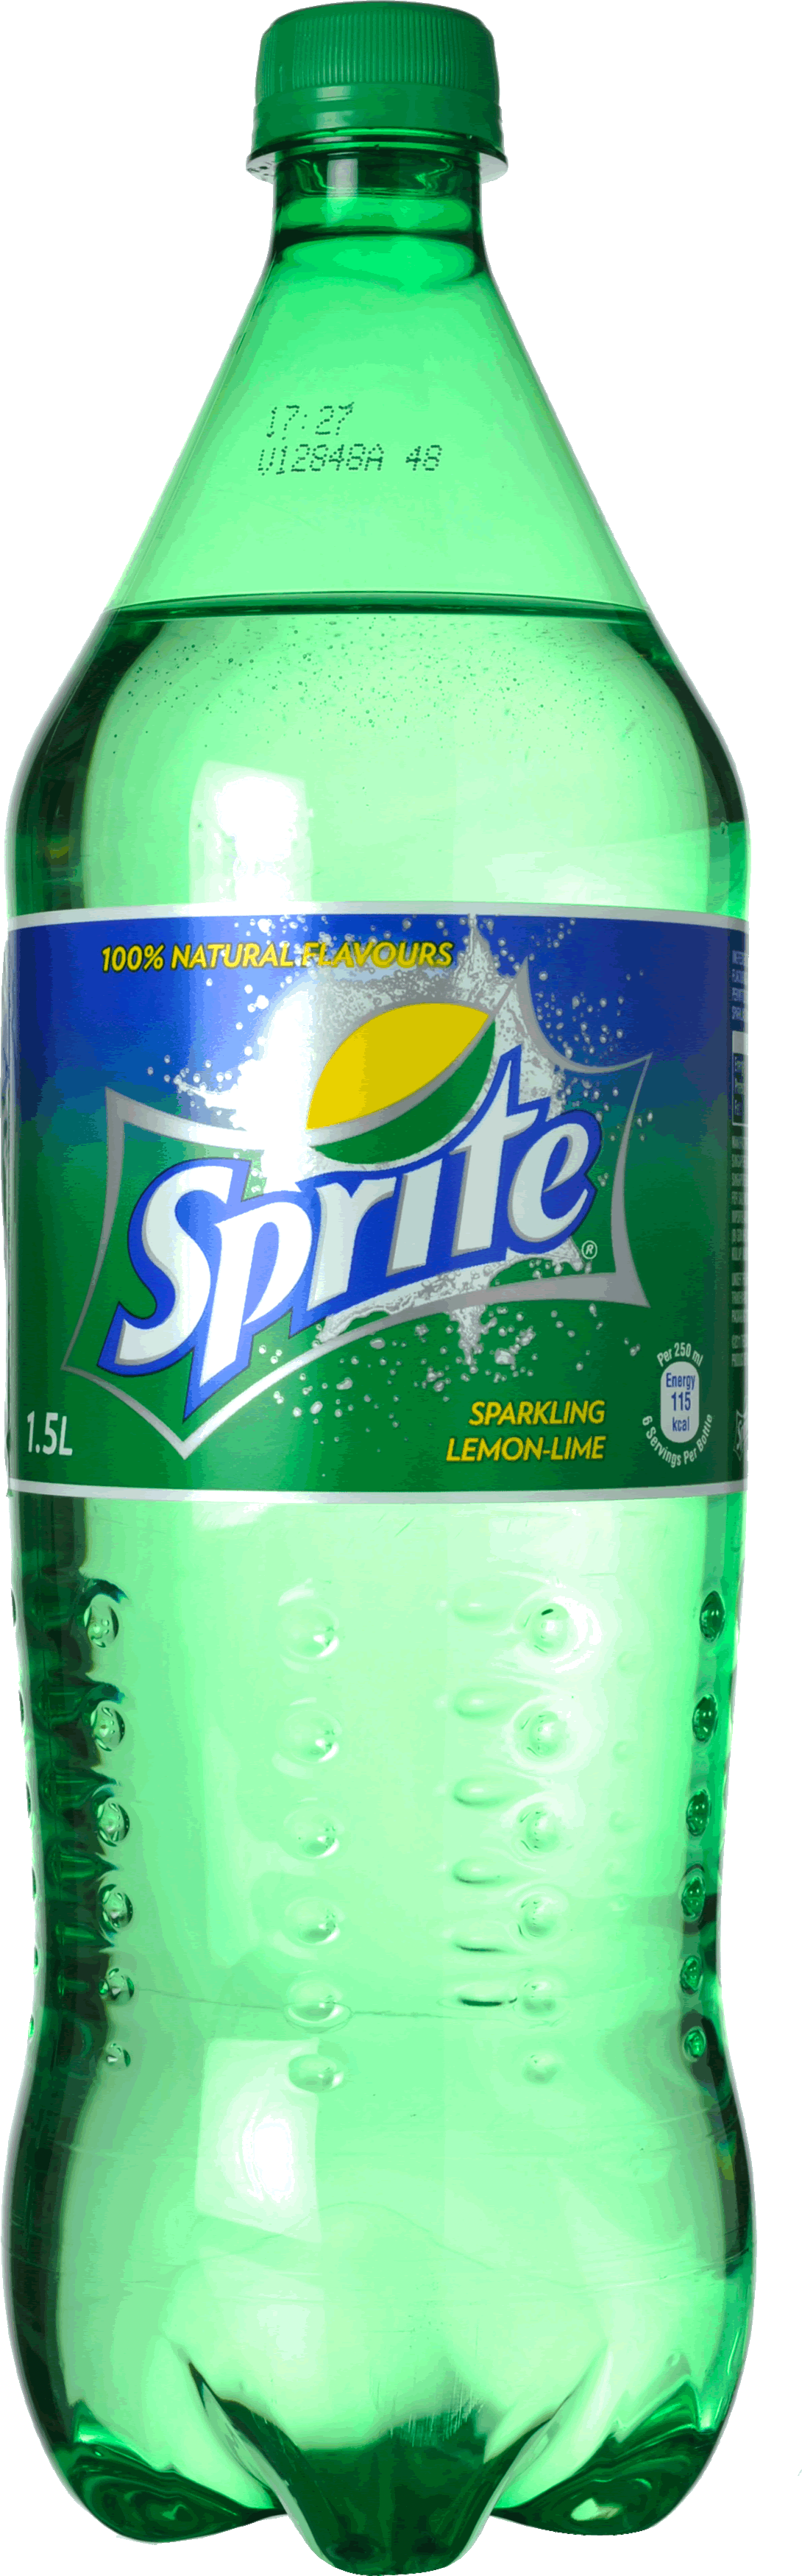 Sprite Png Bottle Image - Sprite, Transparent background PNG HD thumbnail